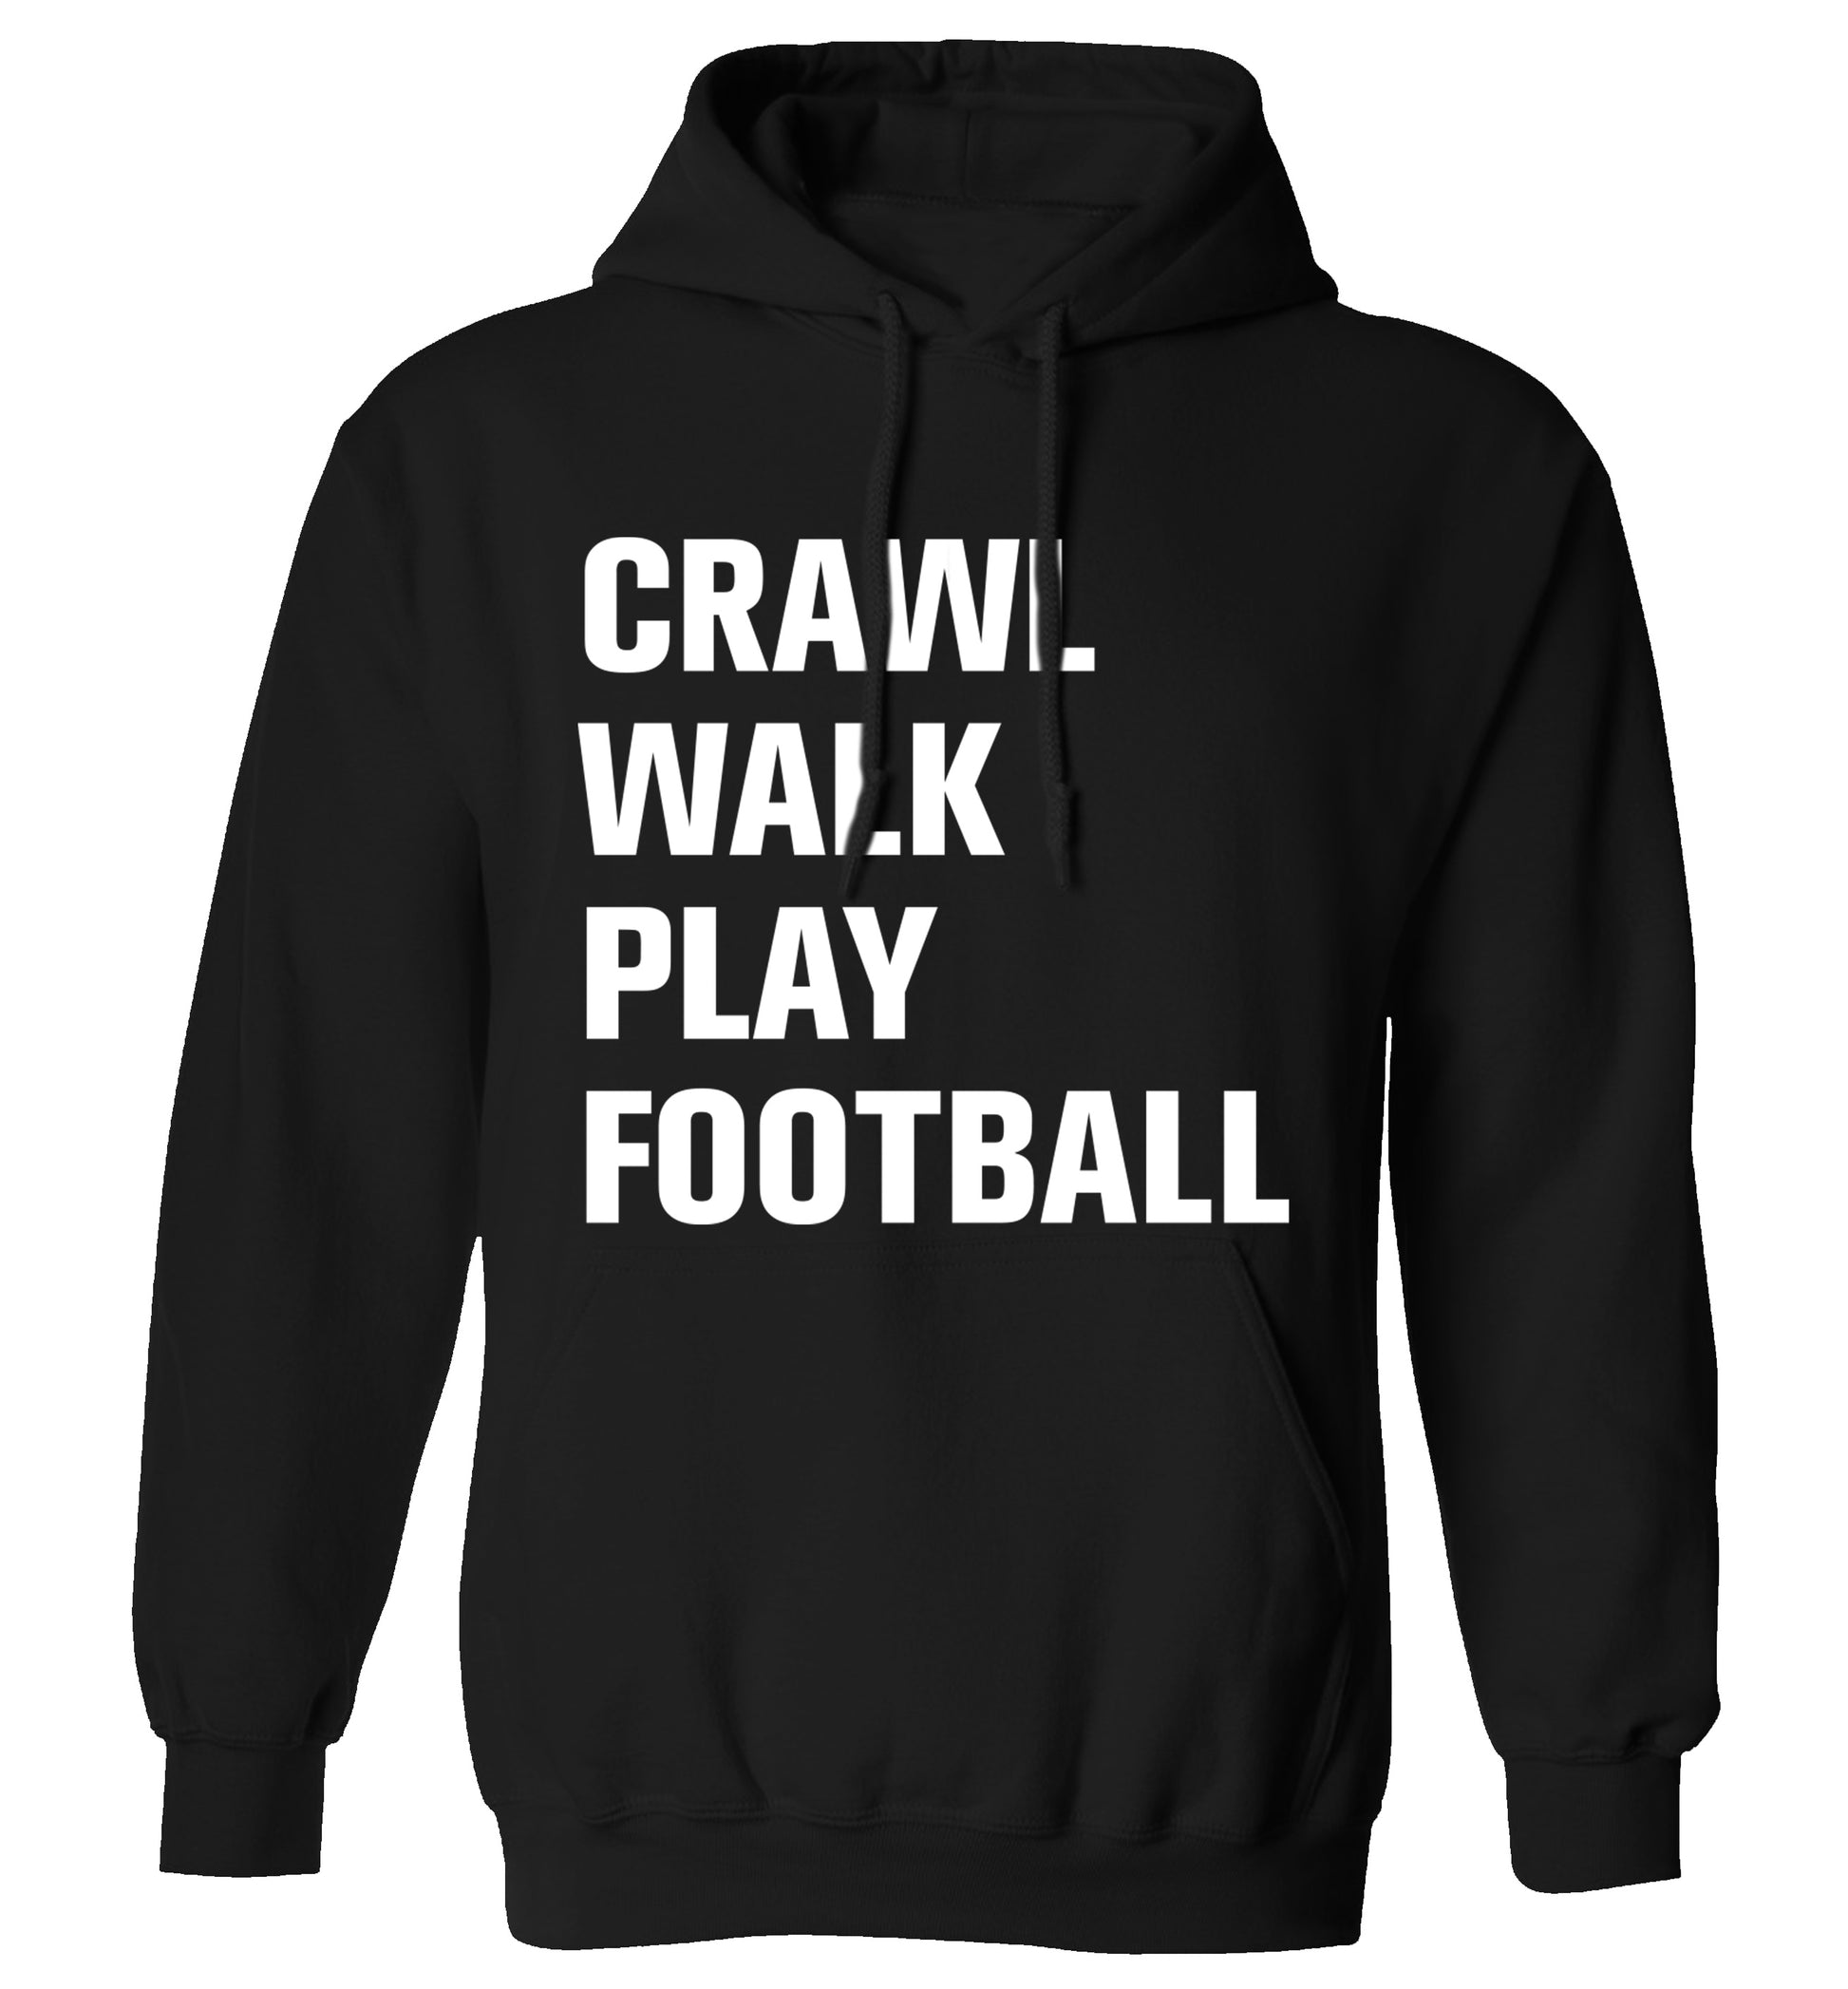 Crawl, walk, play football adults unisex black hoodie 2XL